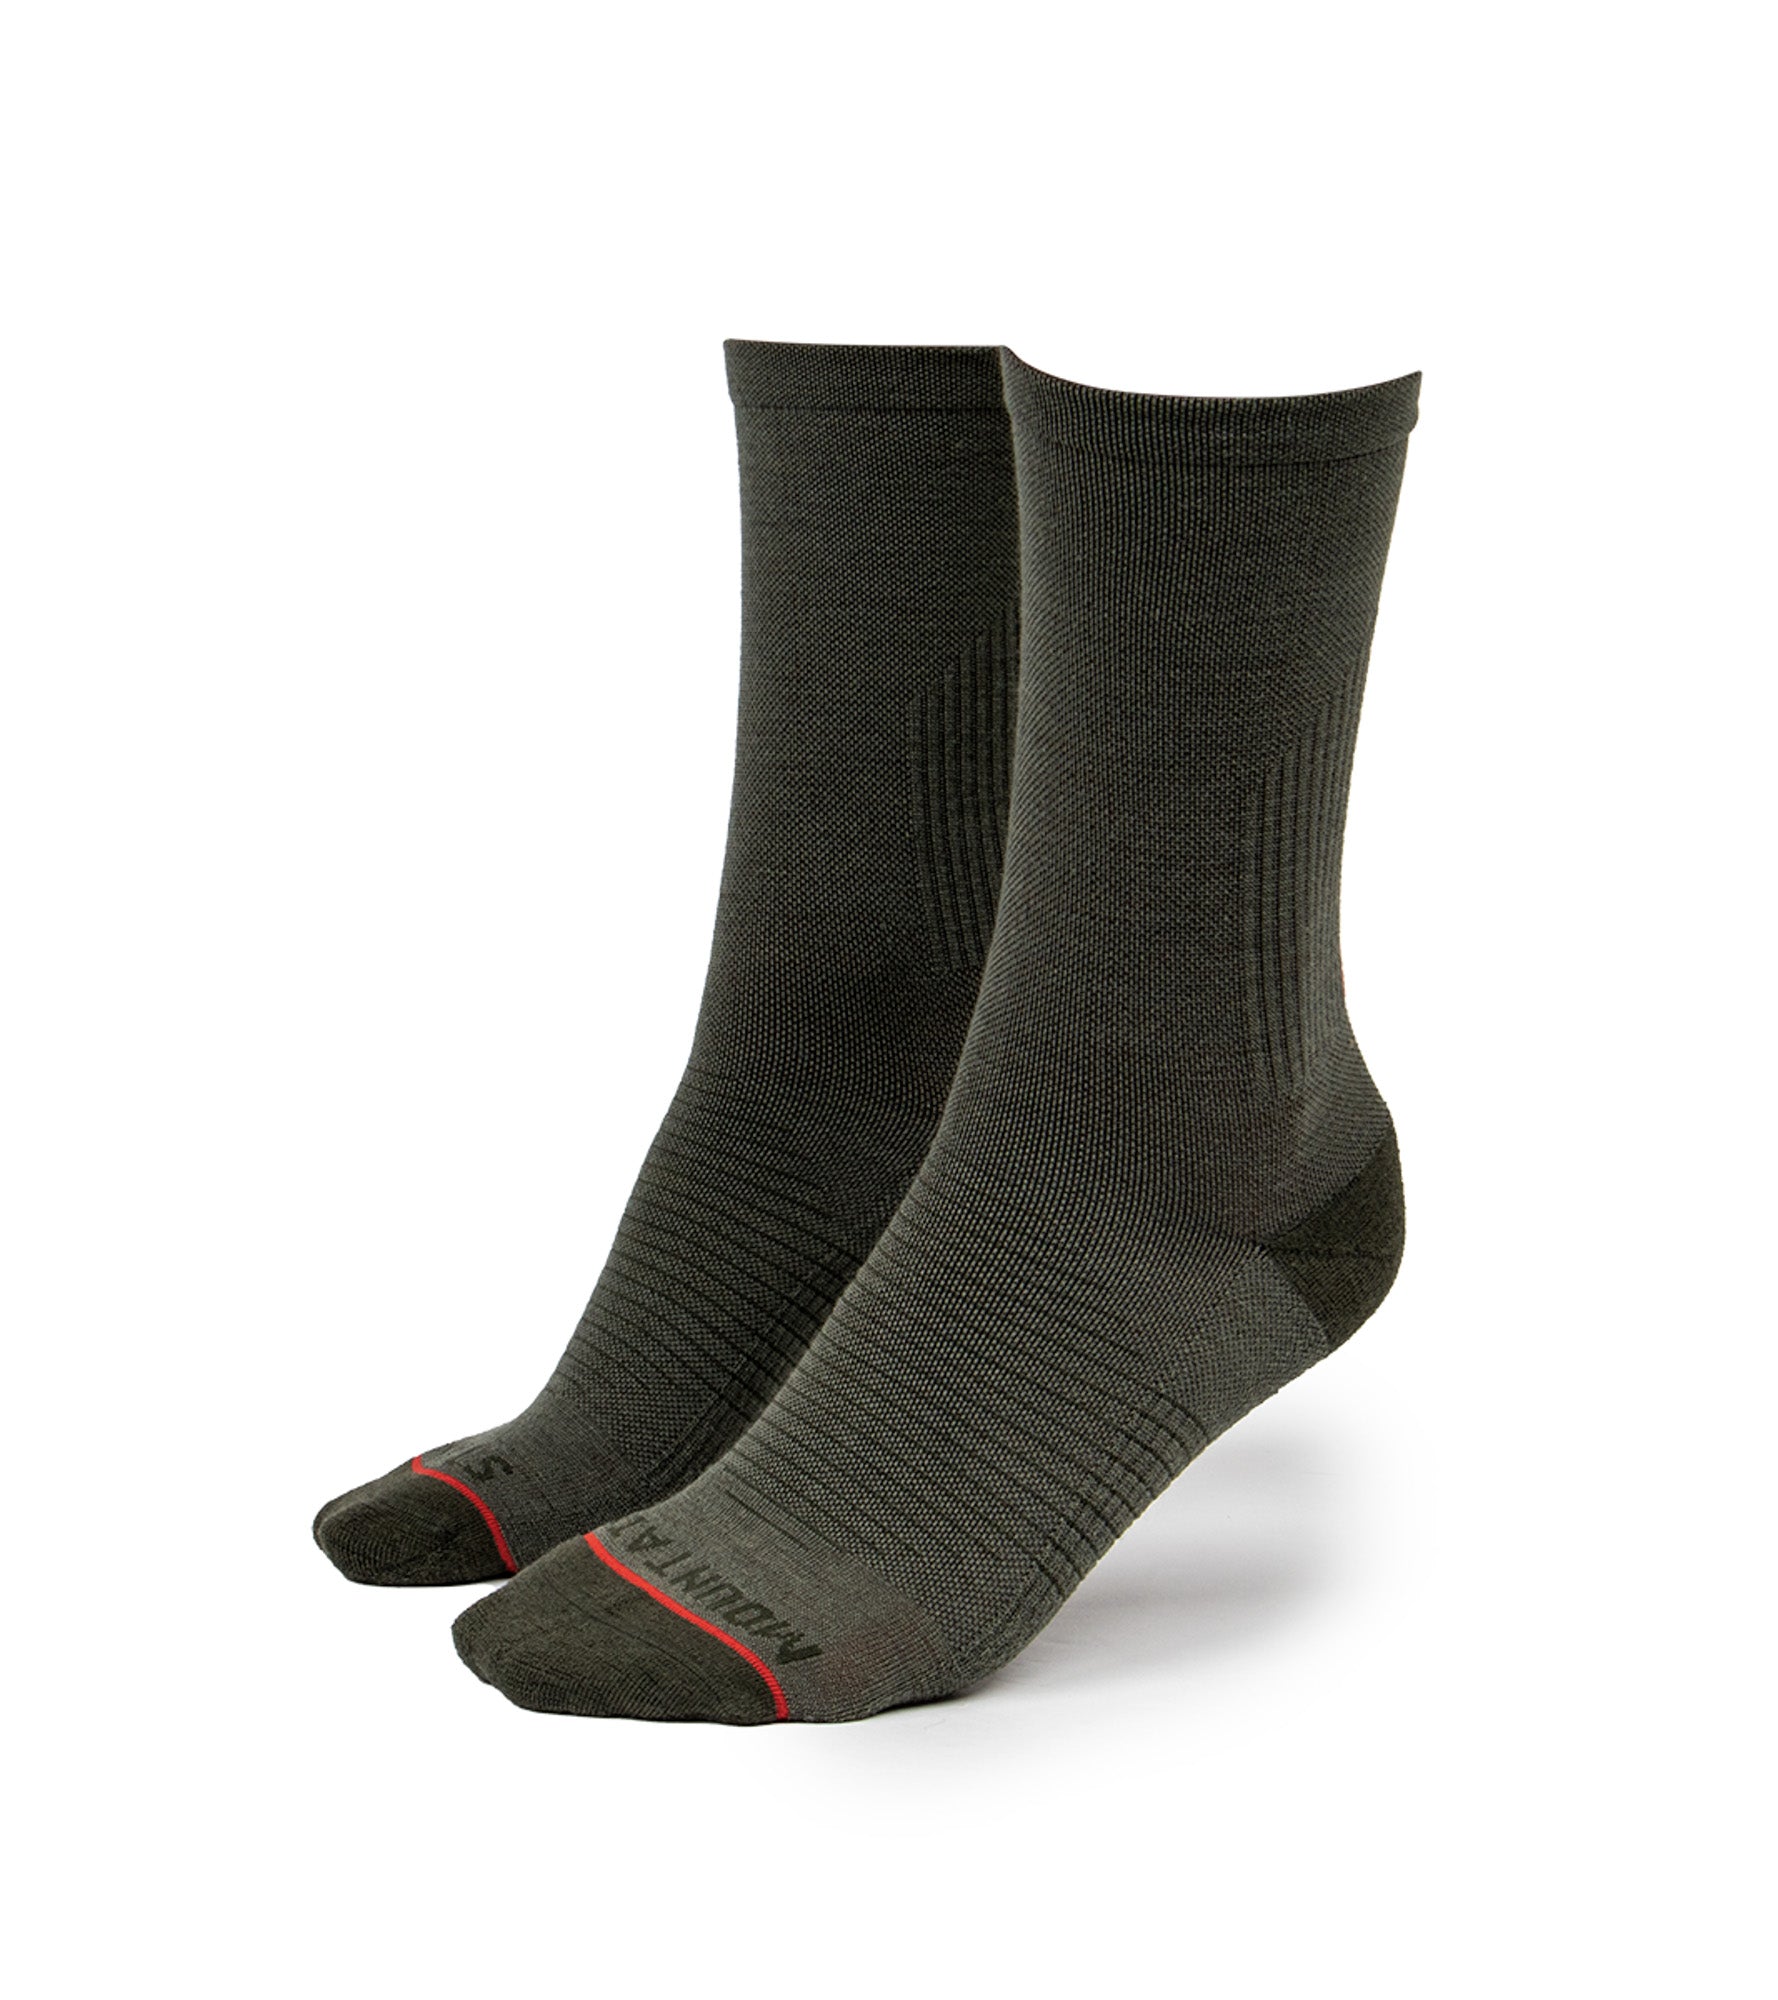 Action Sock | Mountain Standard Ltd.